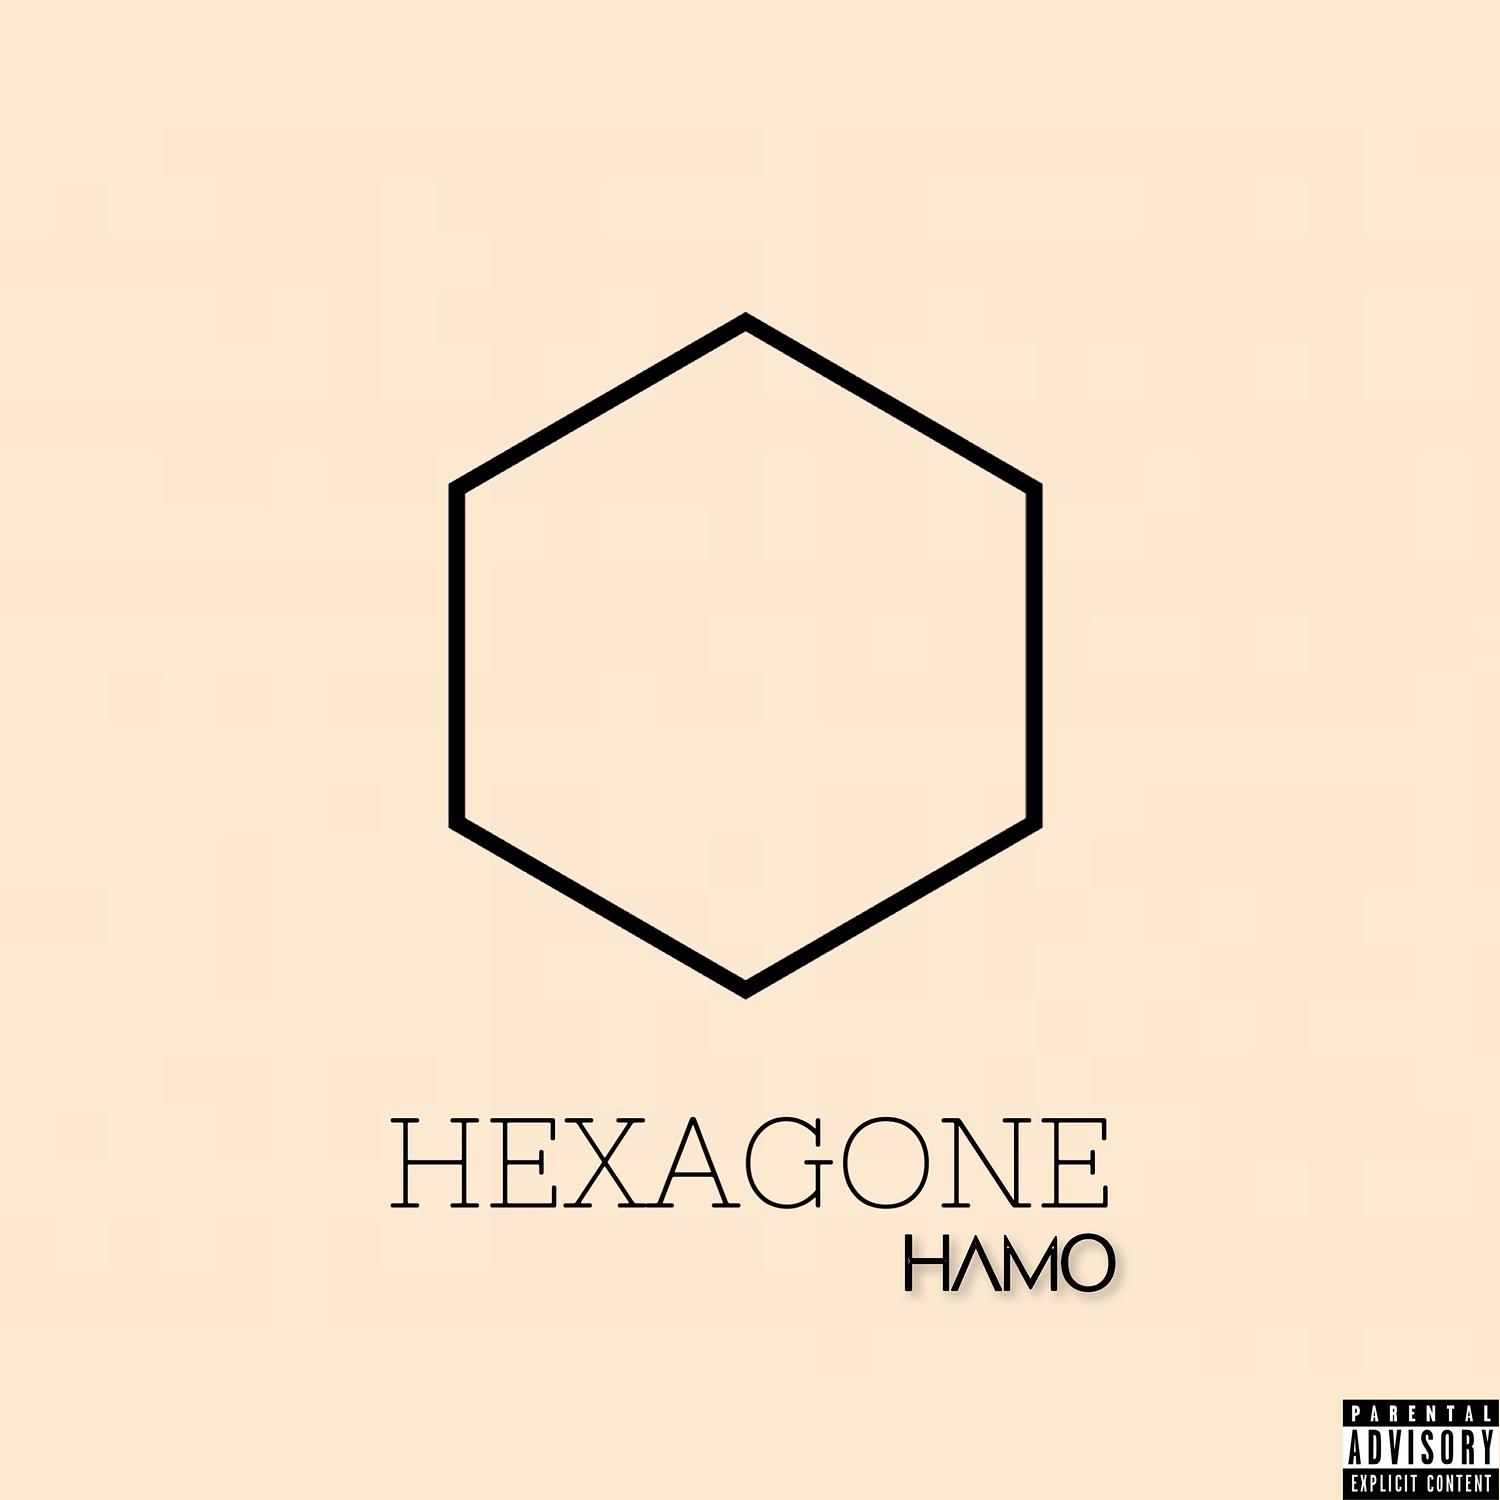 Hamo - Hexagone